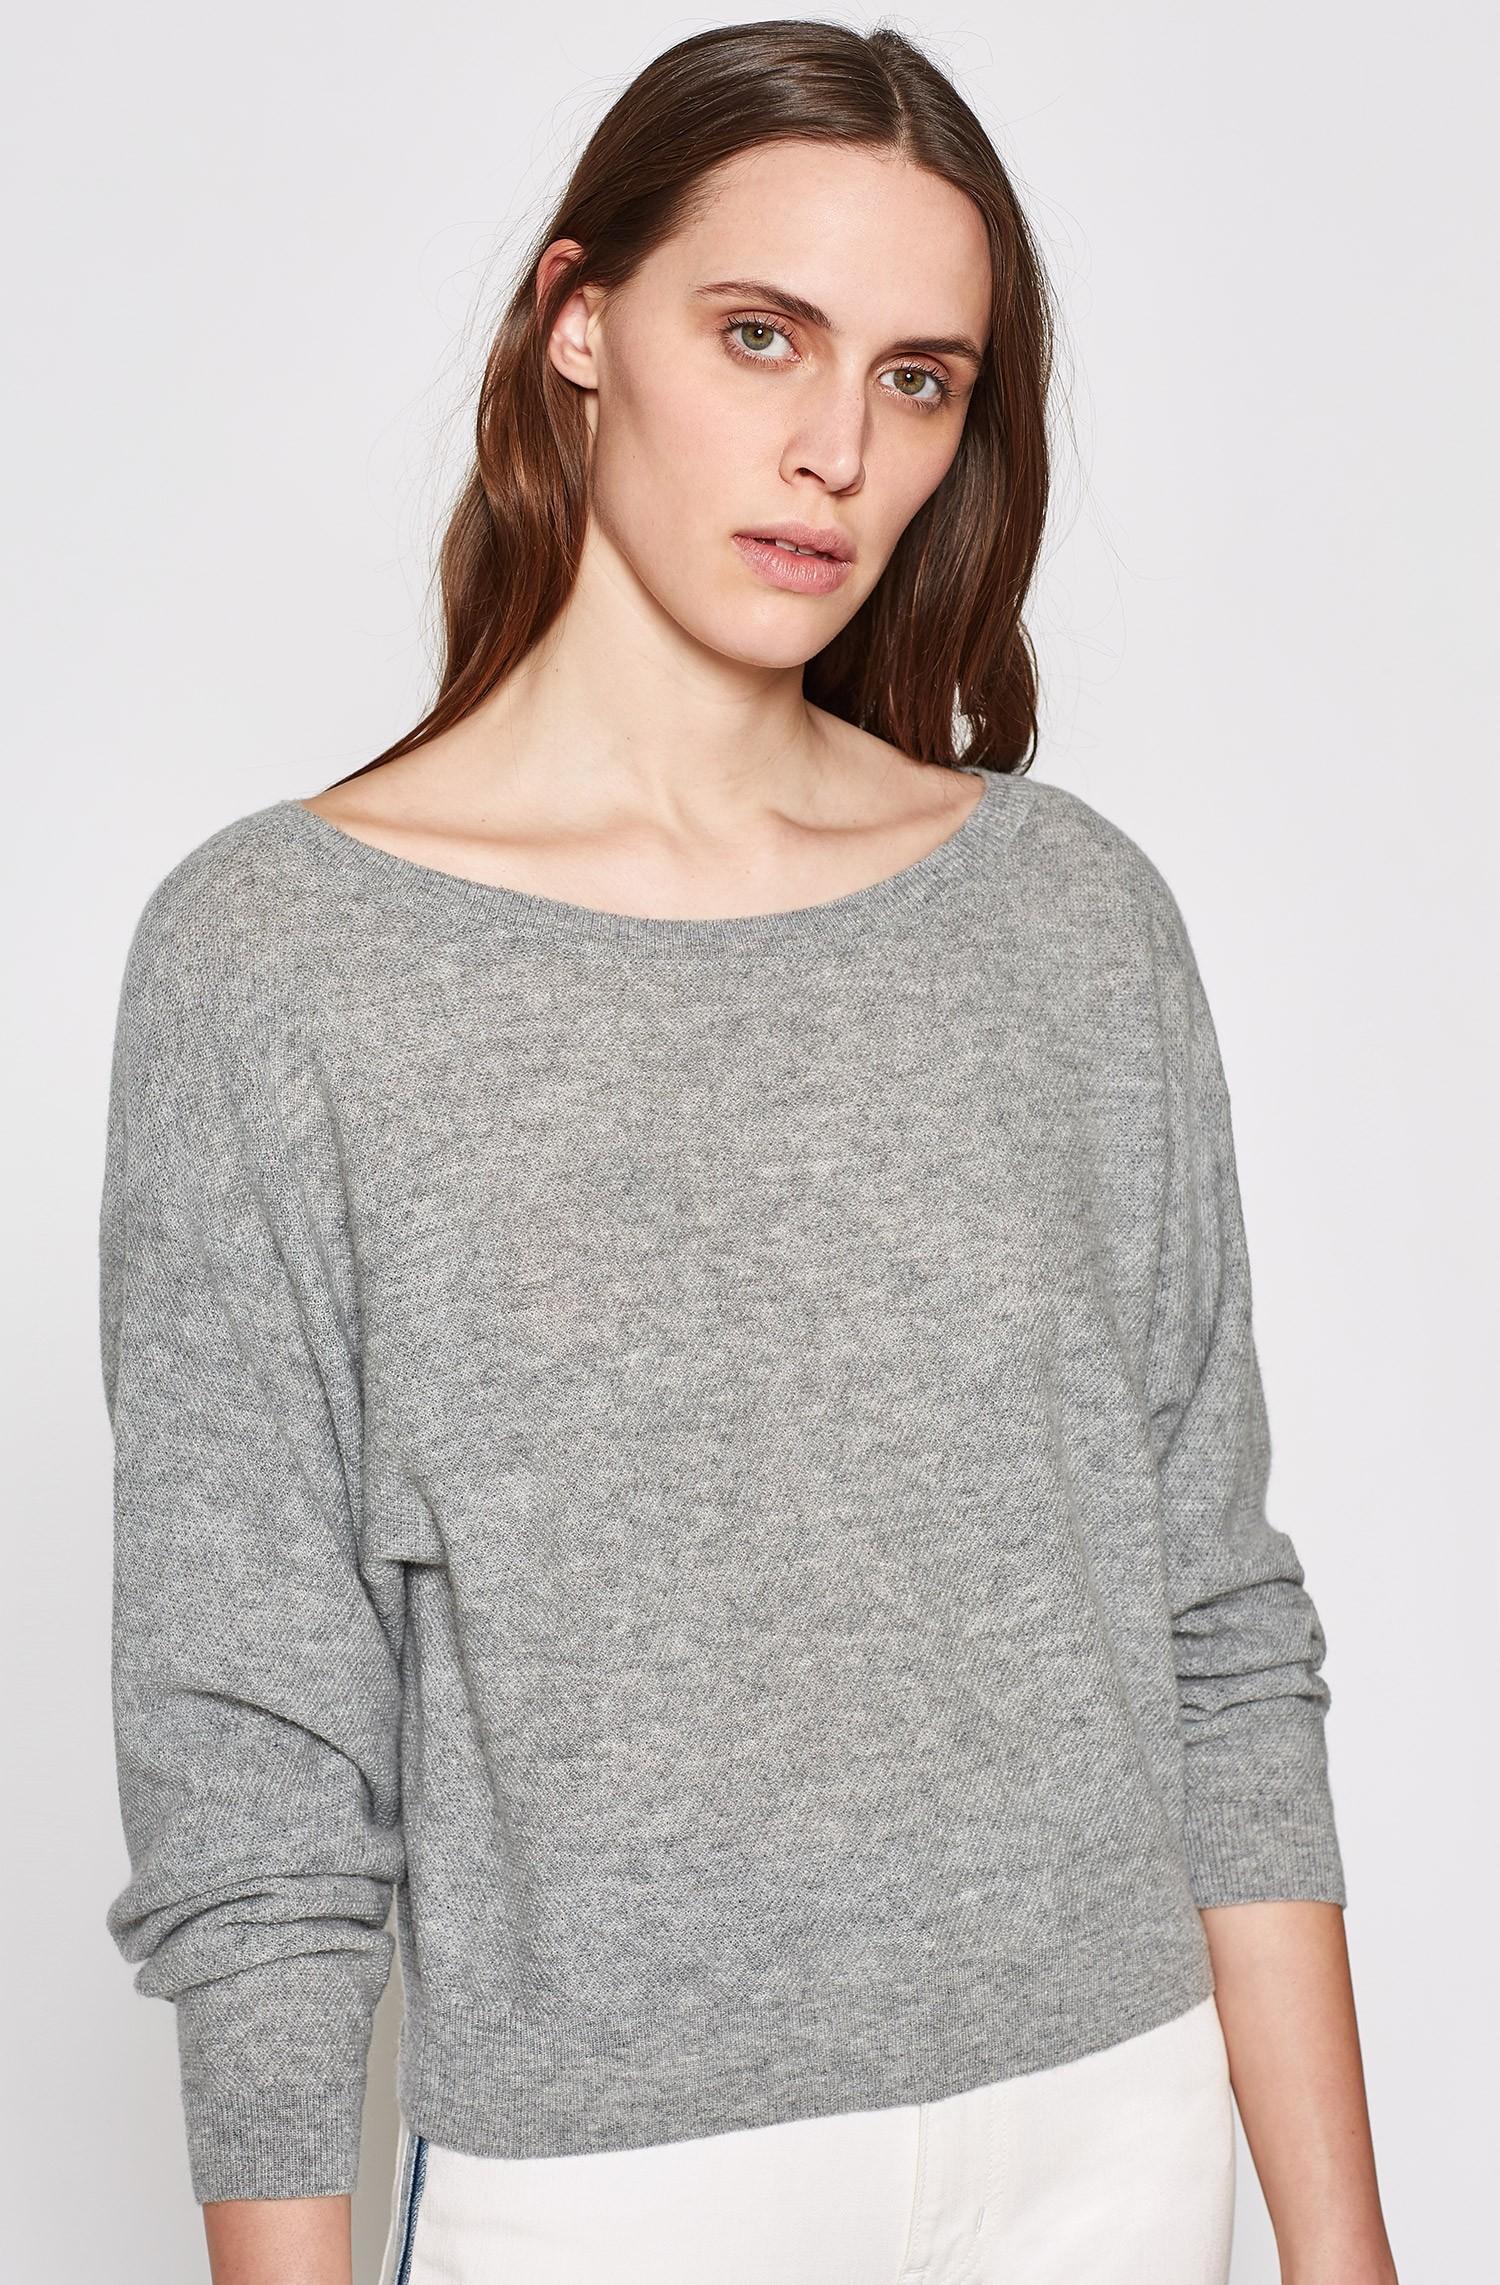 Joie Denim Venidle Wool & Cashmere Sweater in Light Heather Grey (Gray ...